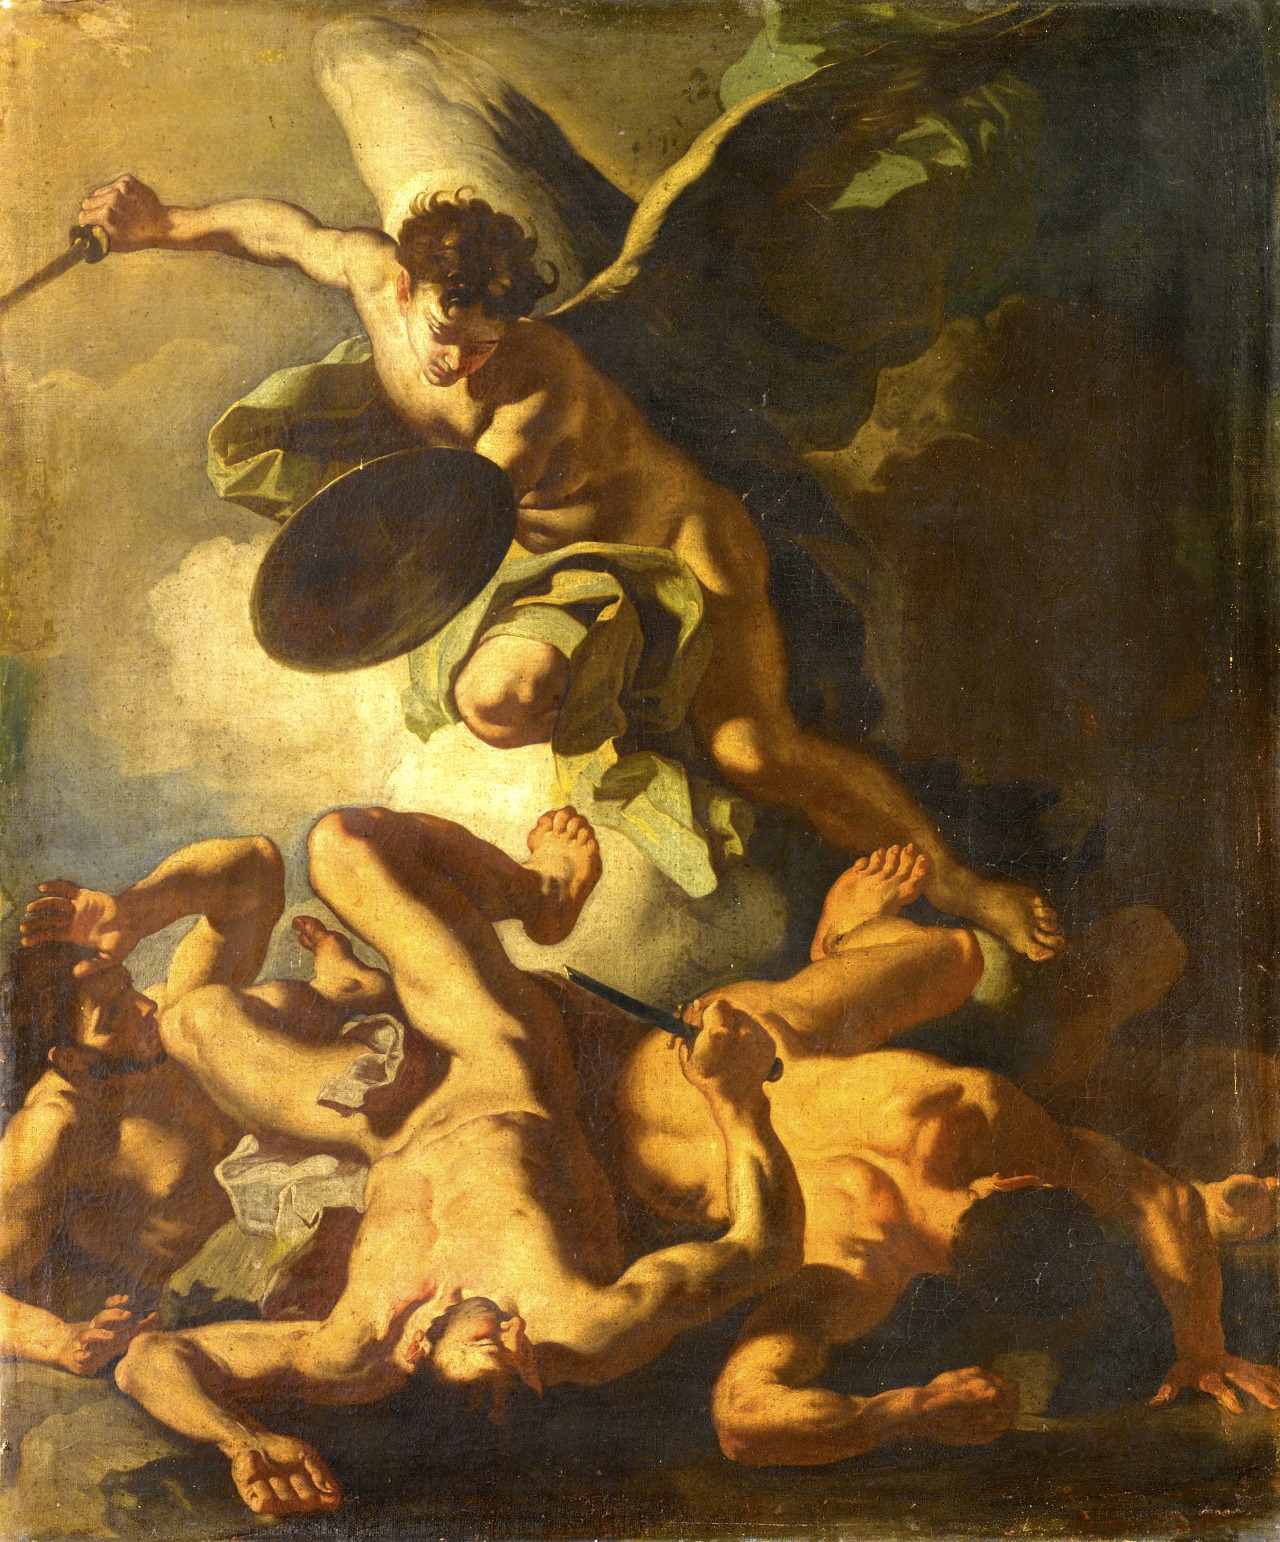 Francesco Solimena, Saint Michael the Archangel Defeating the Rebel Angels, c. 1737